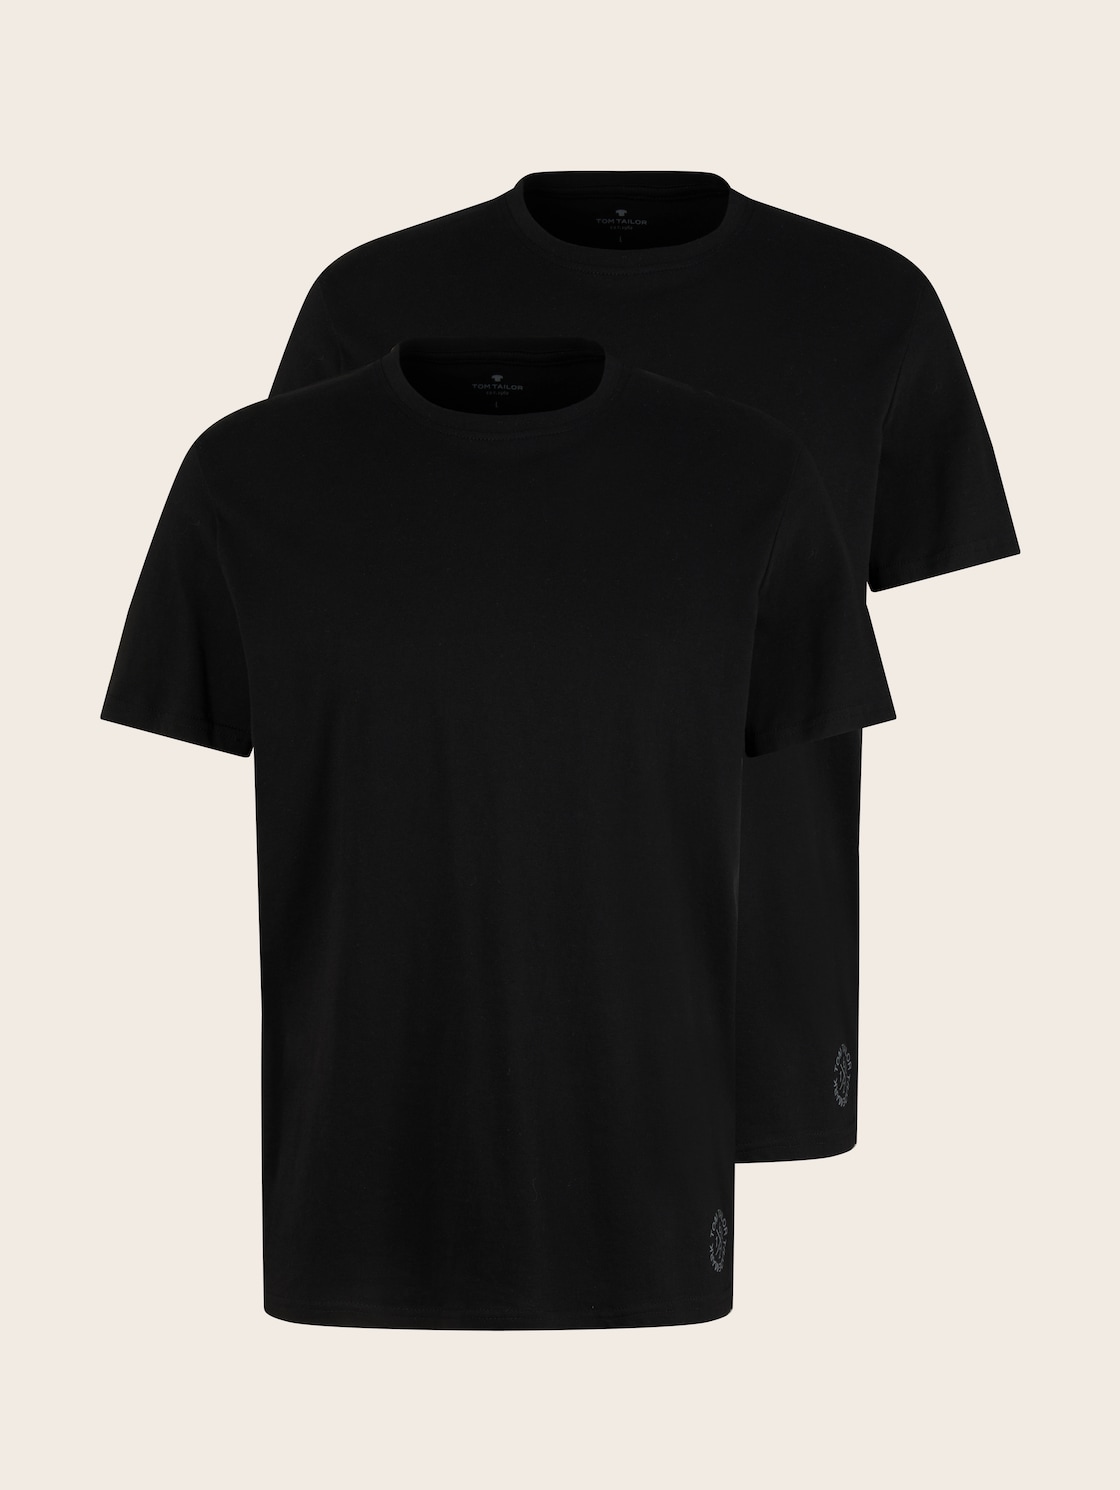 TOM TAILOR Herren Doppelpack T-Shirt, schwarz, Logo Print, Gr. S von Tom Tailor